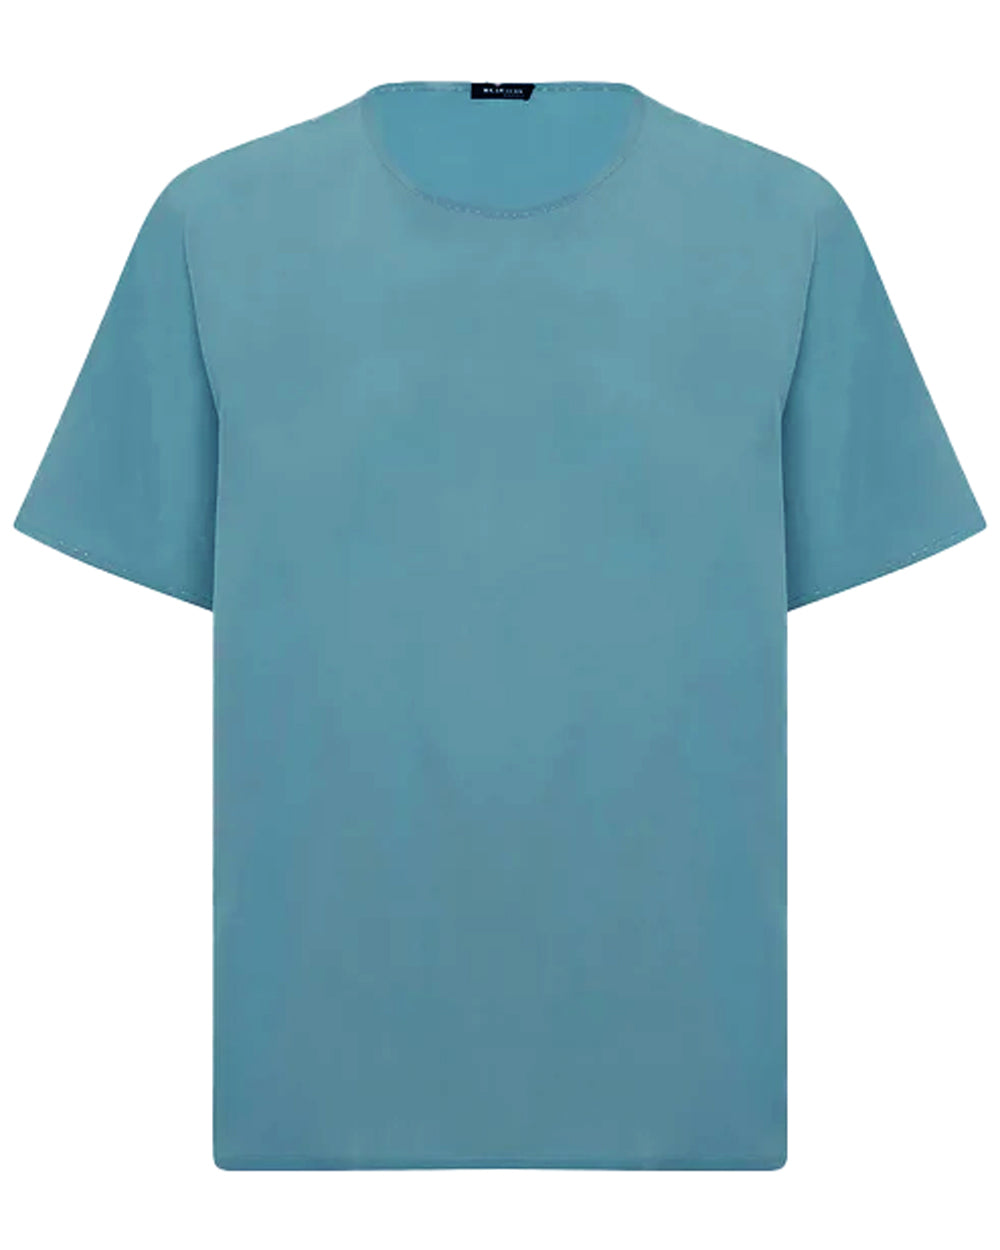 Turquoise Short Sleeve Silk Shirt